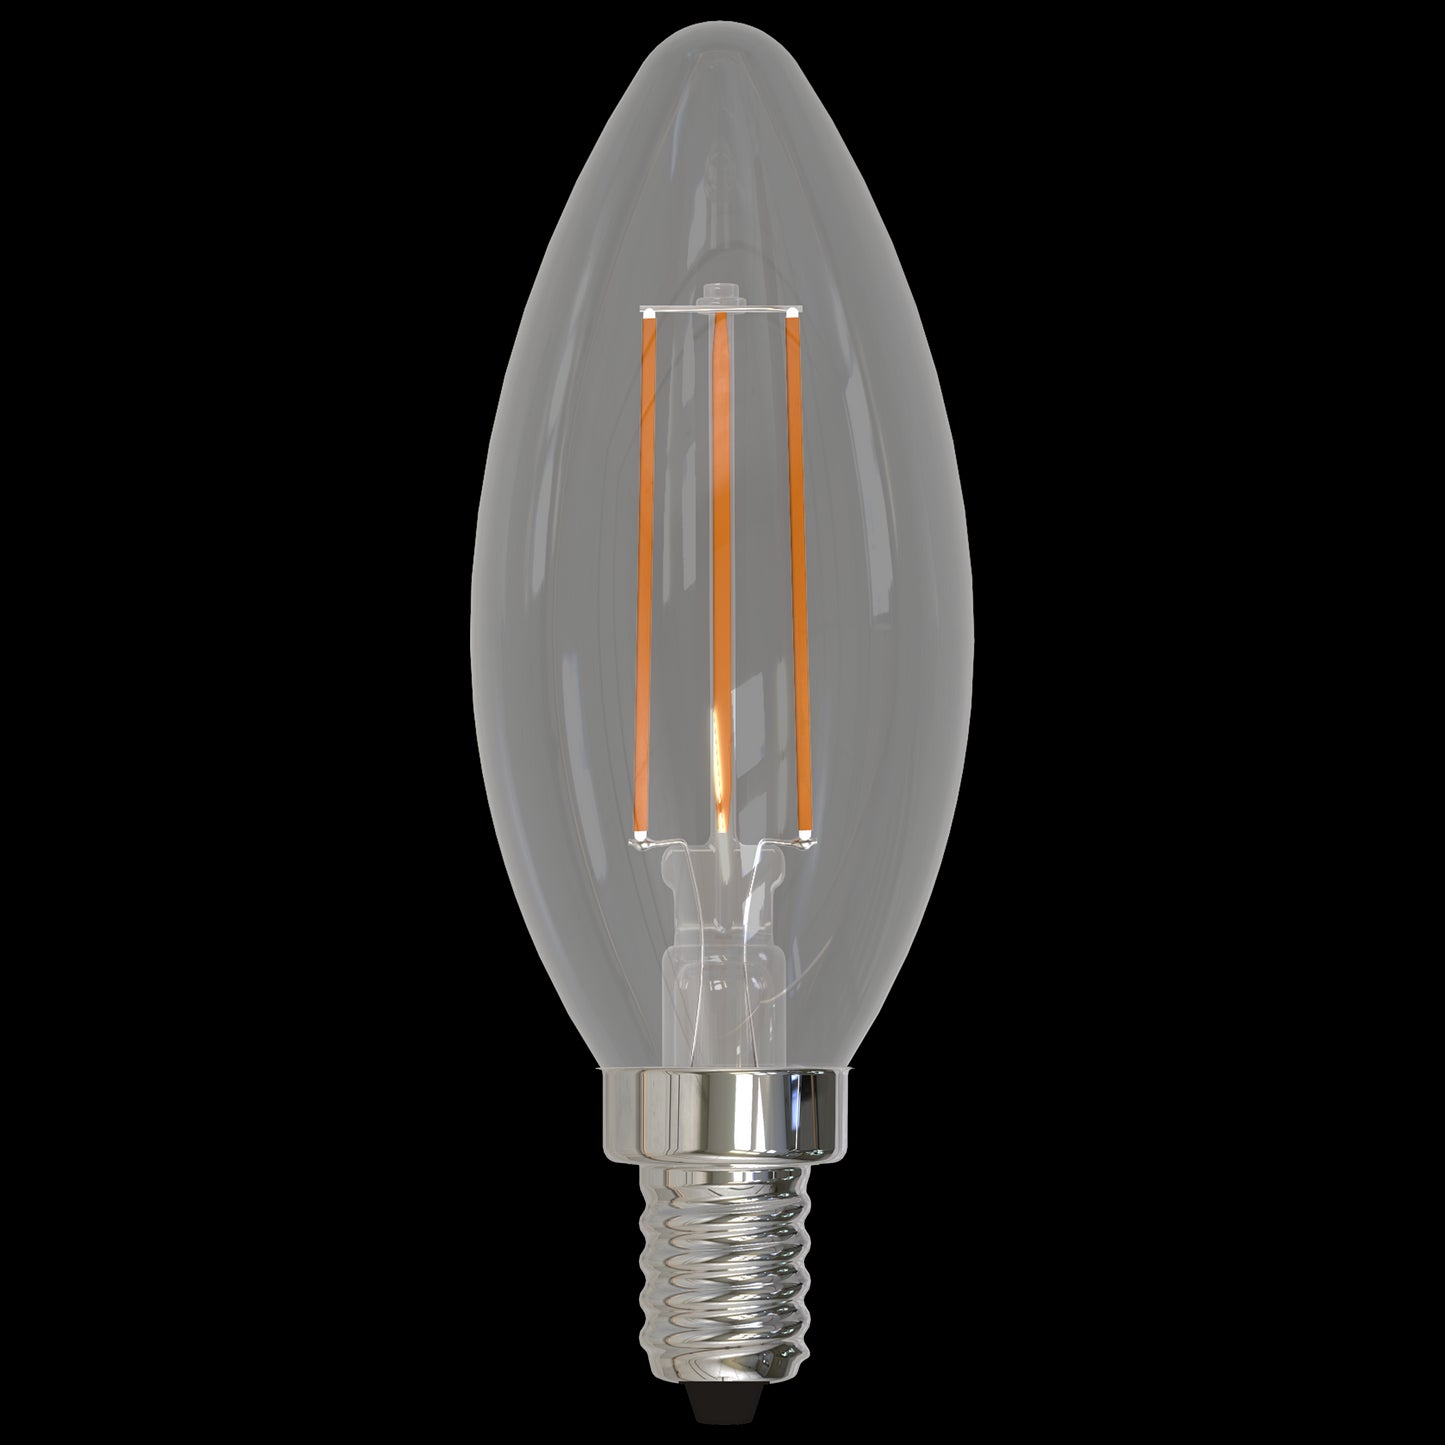 Bulbrite 5 Watt B11 LED Filament Light Bulb, 2700K E12 Candelabra Base, Clear Finish